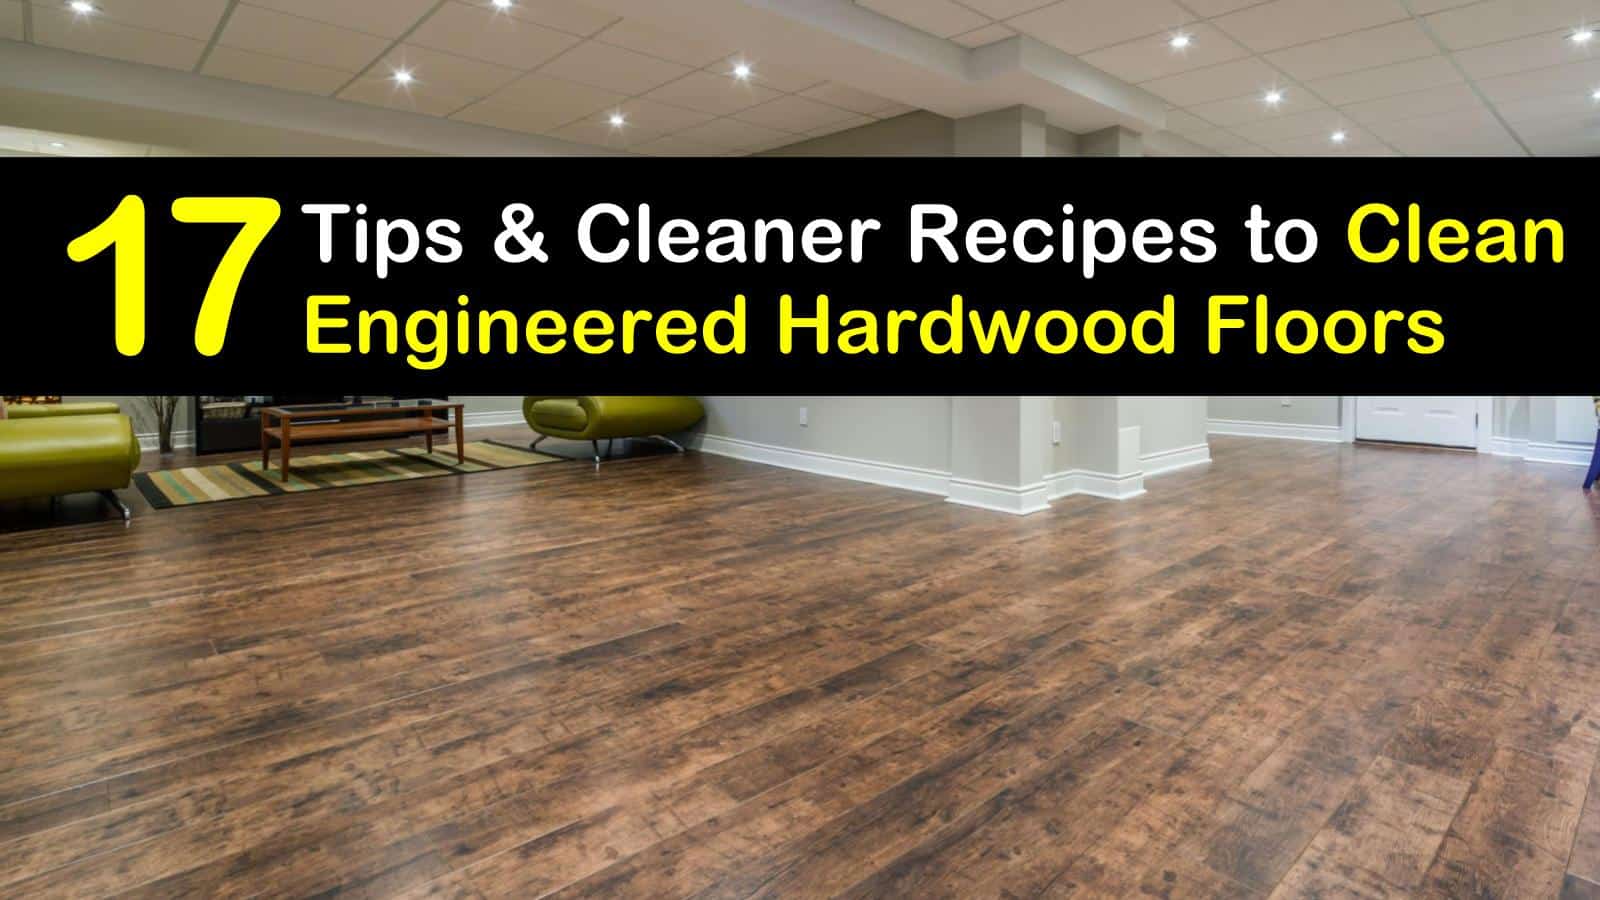 how to clean engineered hardwood floors titleimg1